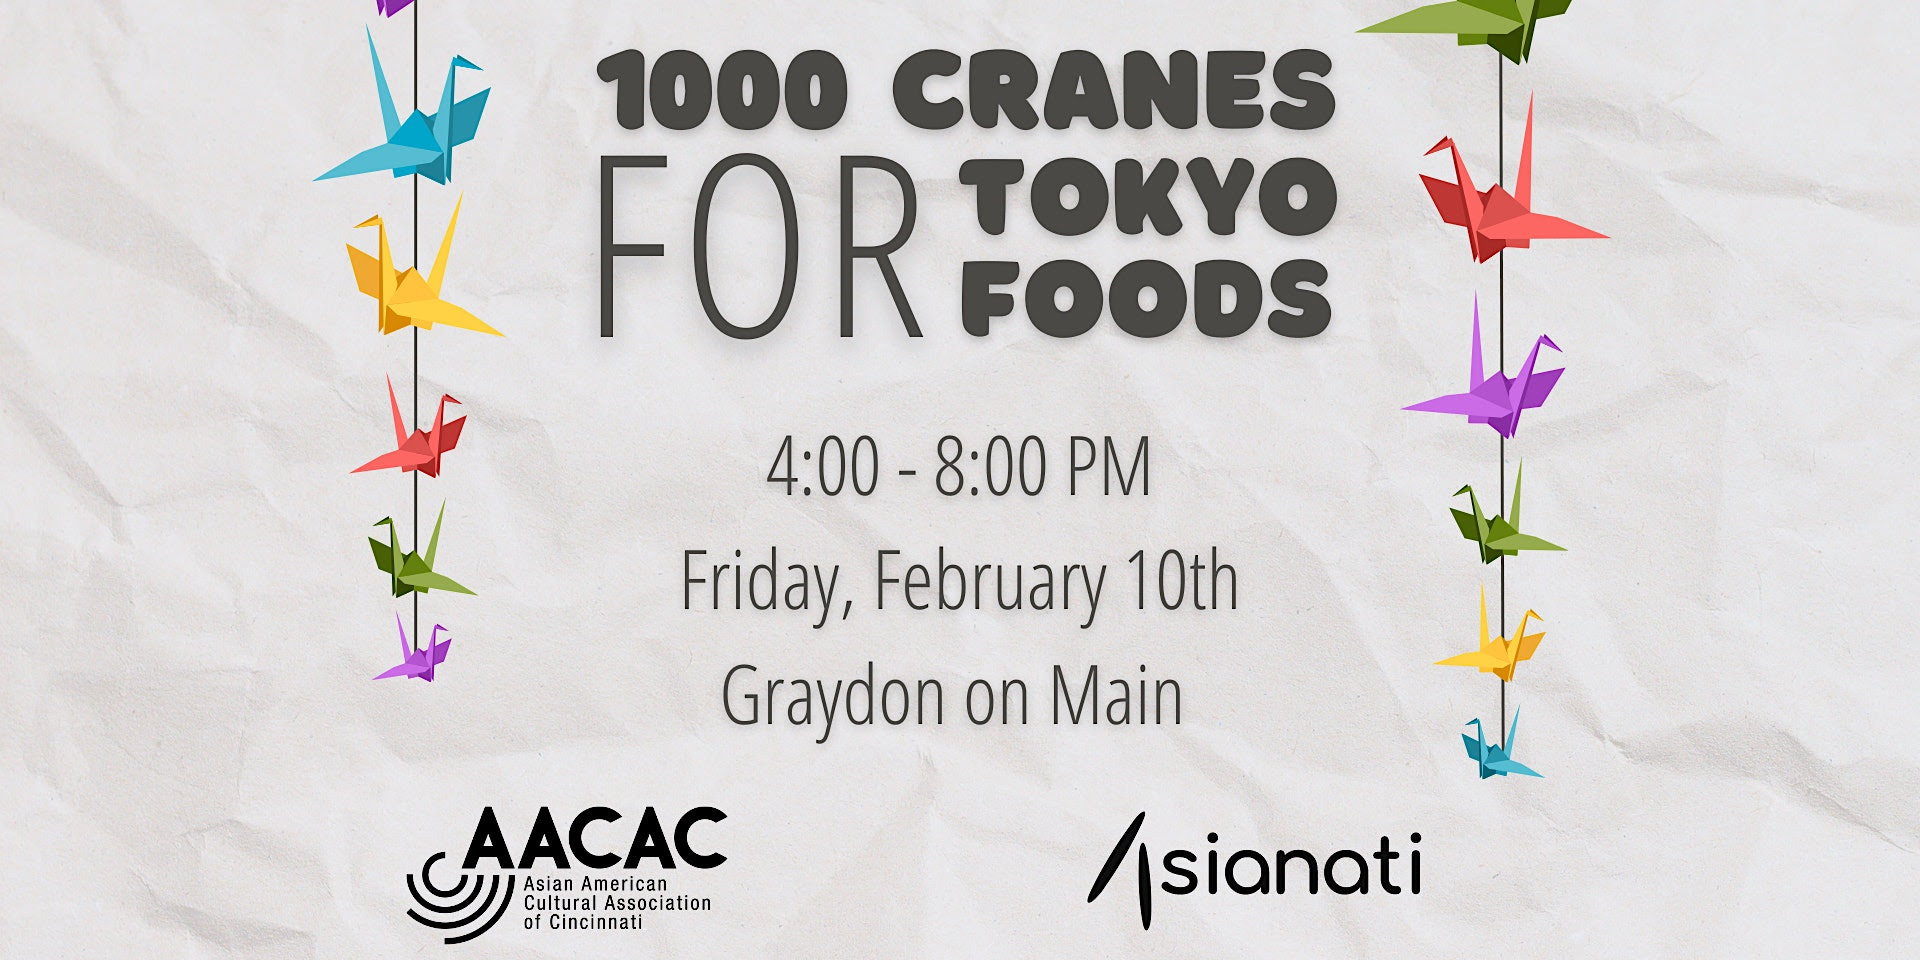 1000 Crane Fundraiser for Tokyo Foods